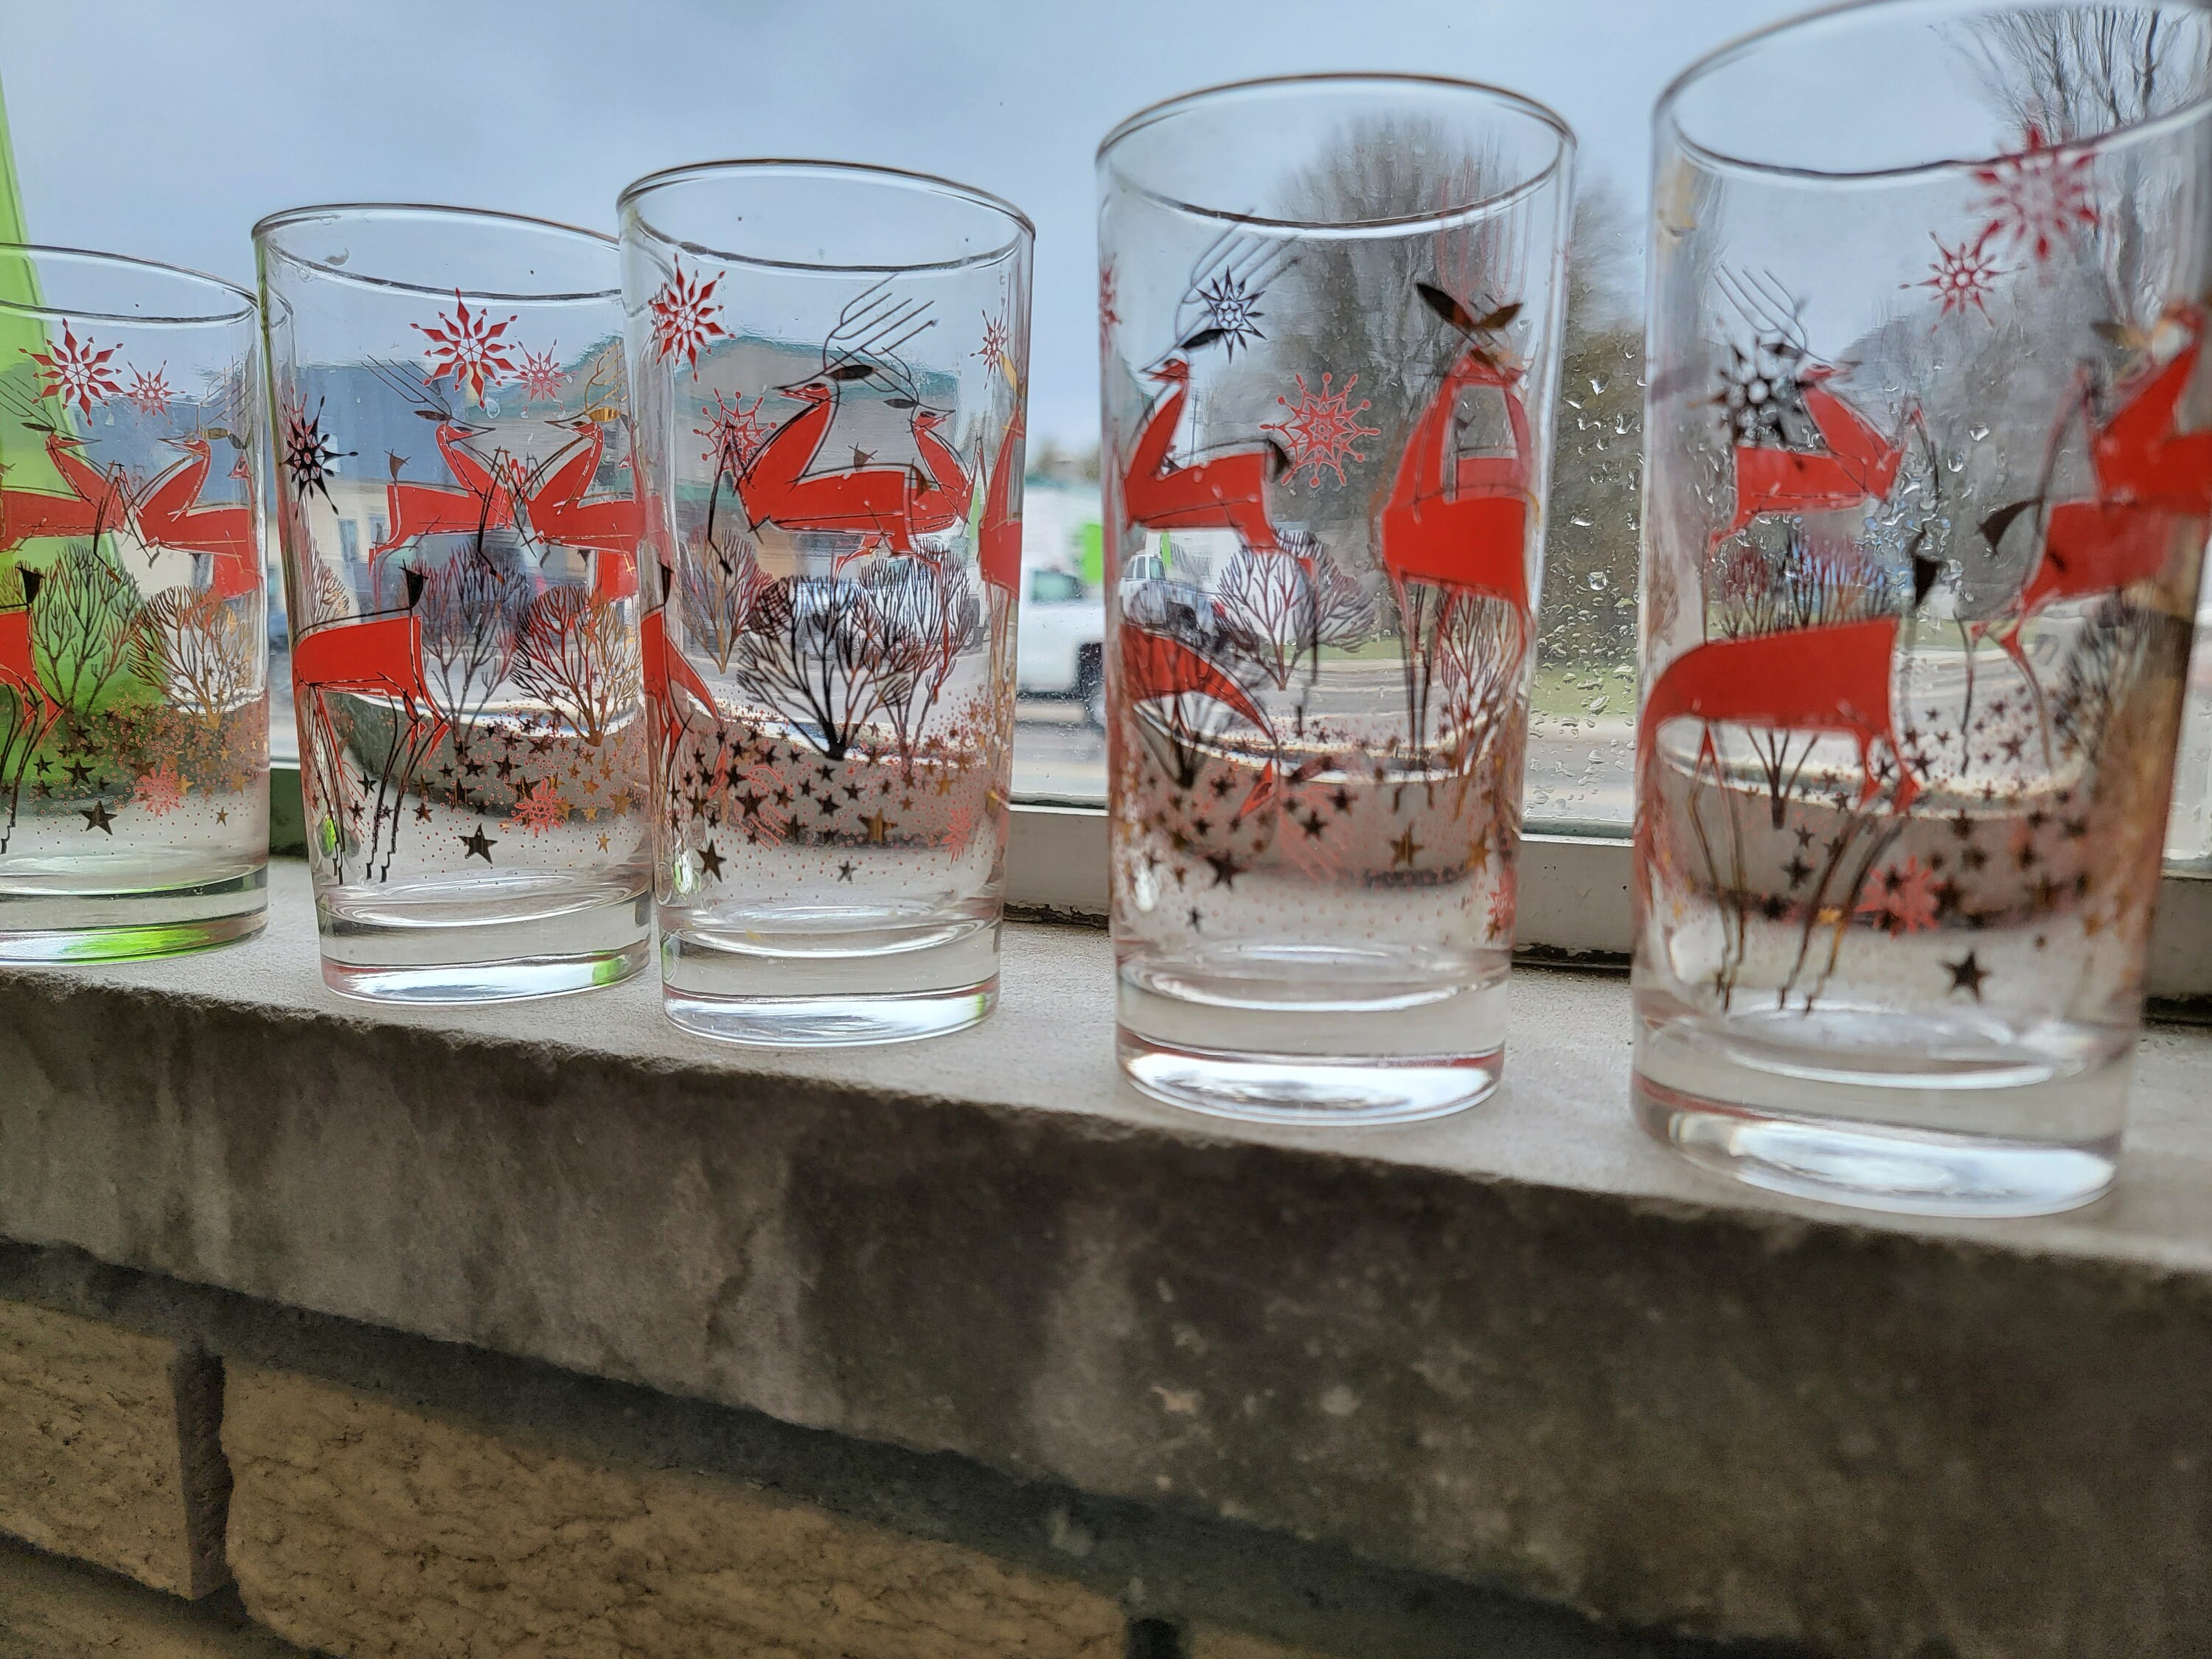 Libbey Mid-Century Atomic Deer Highball Glasses (Set of 4)